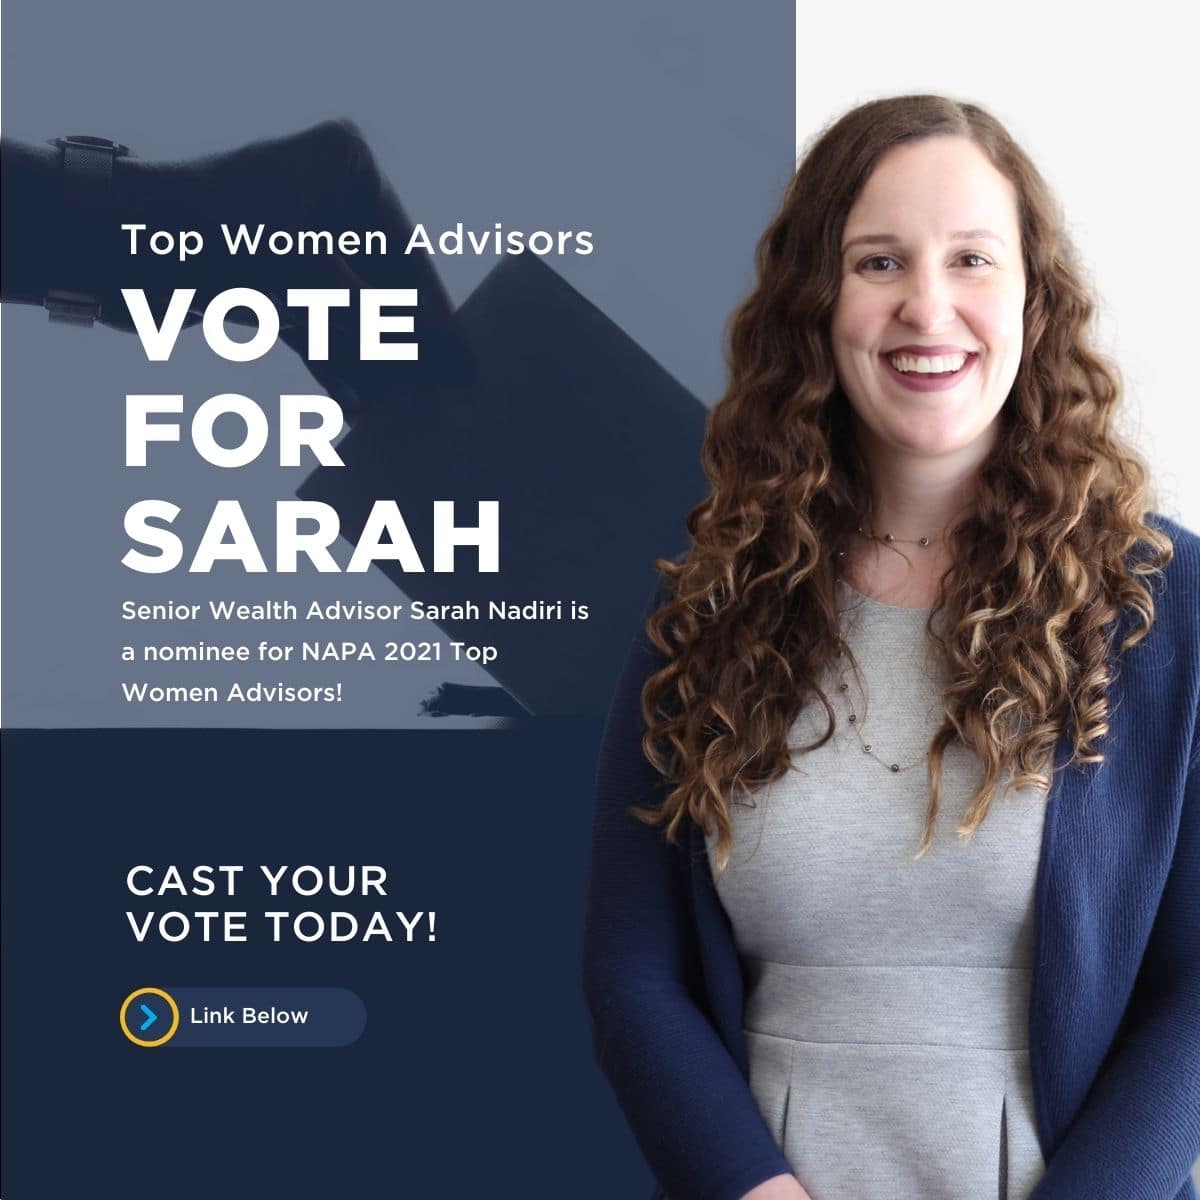 VOTE FOR SARAH